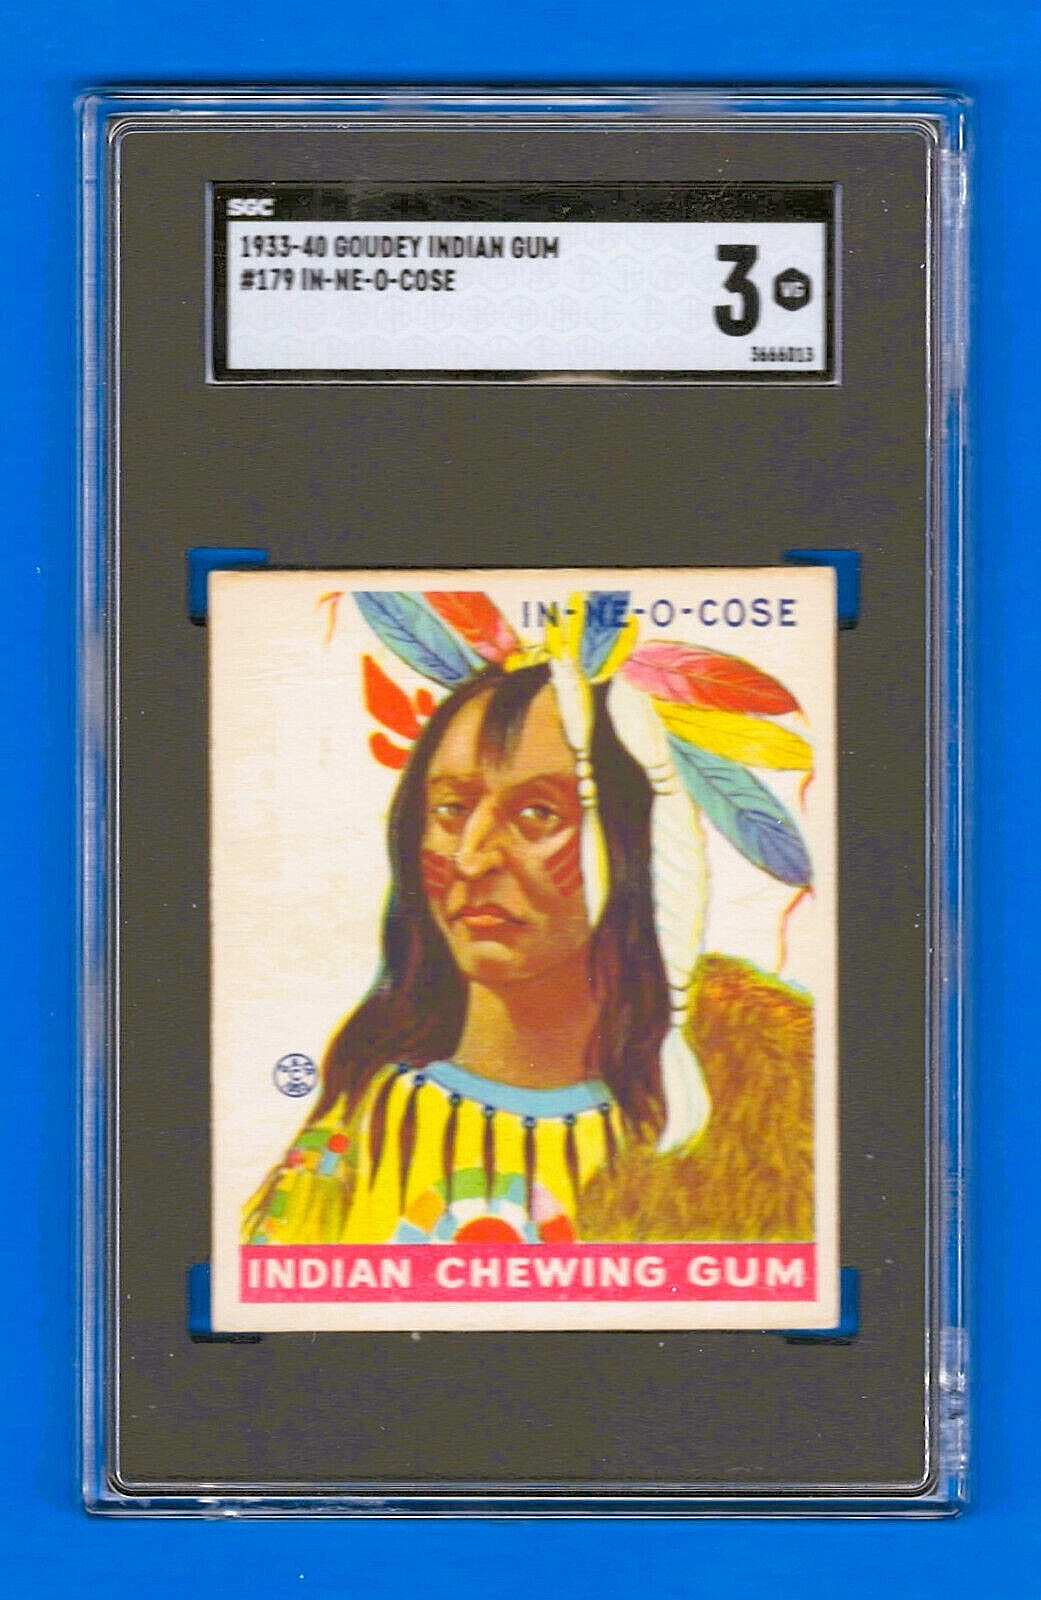 1933-40 R73 Goudey Indian Gum #179 - IN-NE-O-COSE - Series 312 - SGC 3 NICE CARD